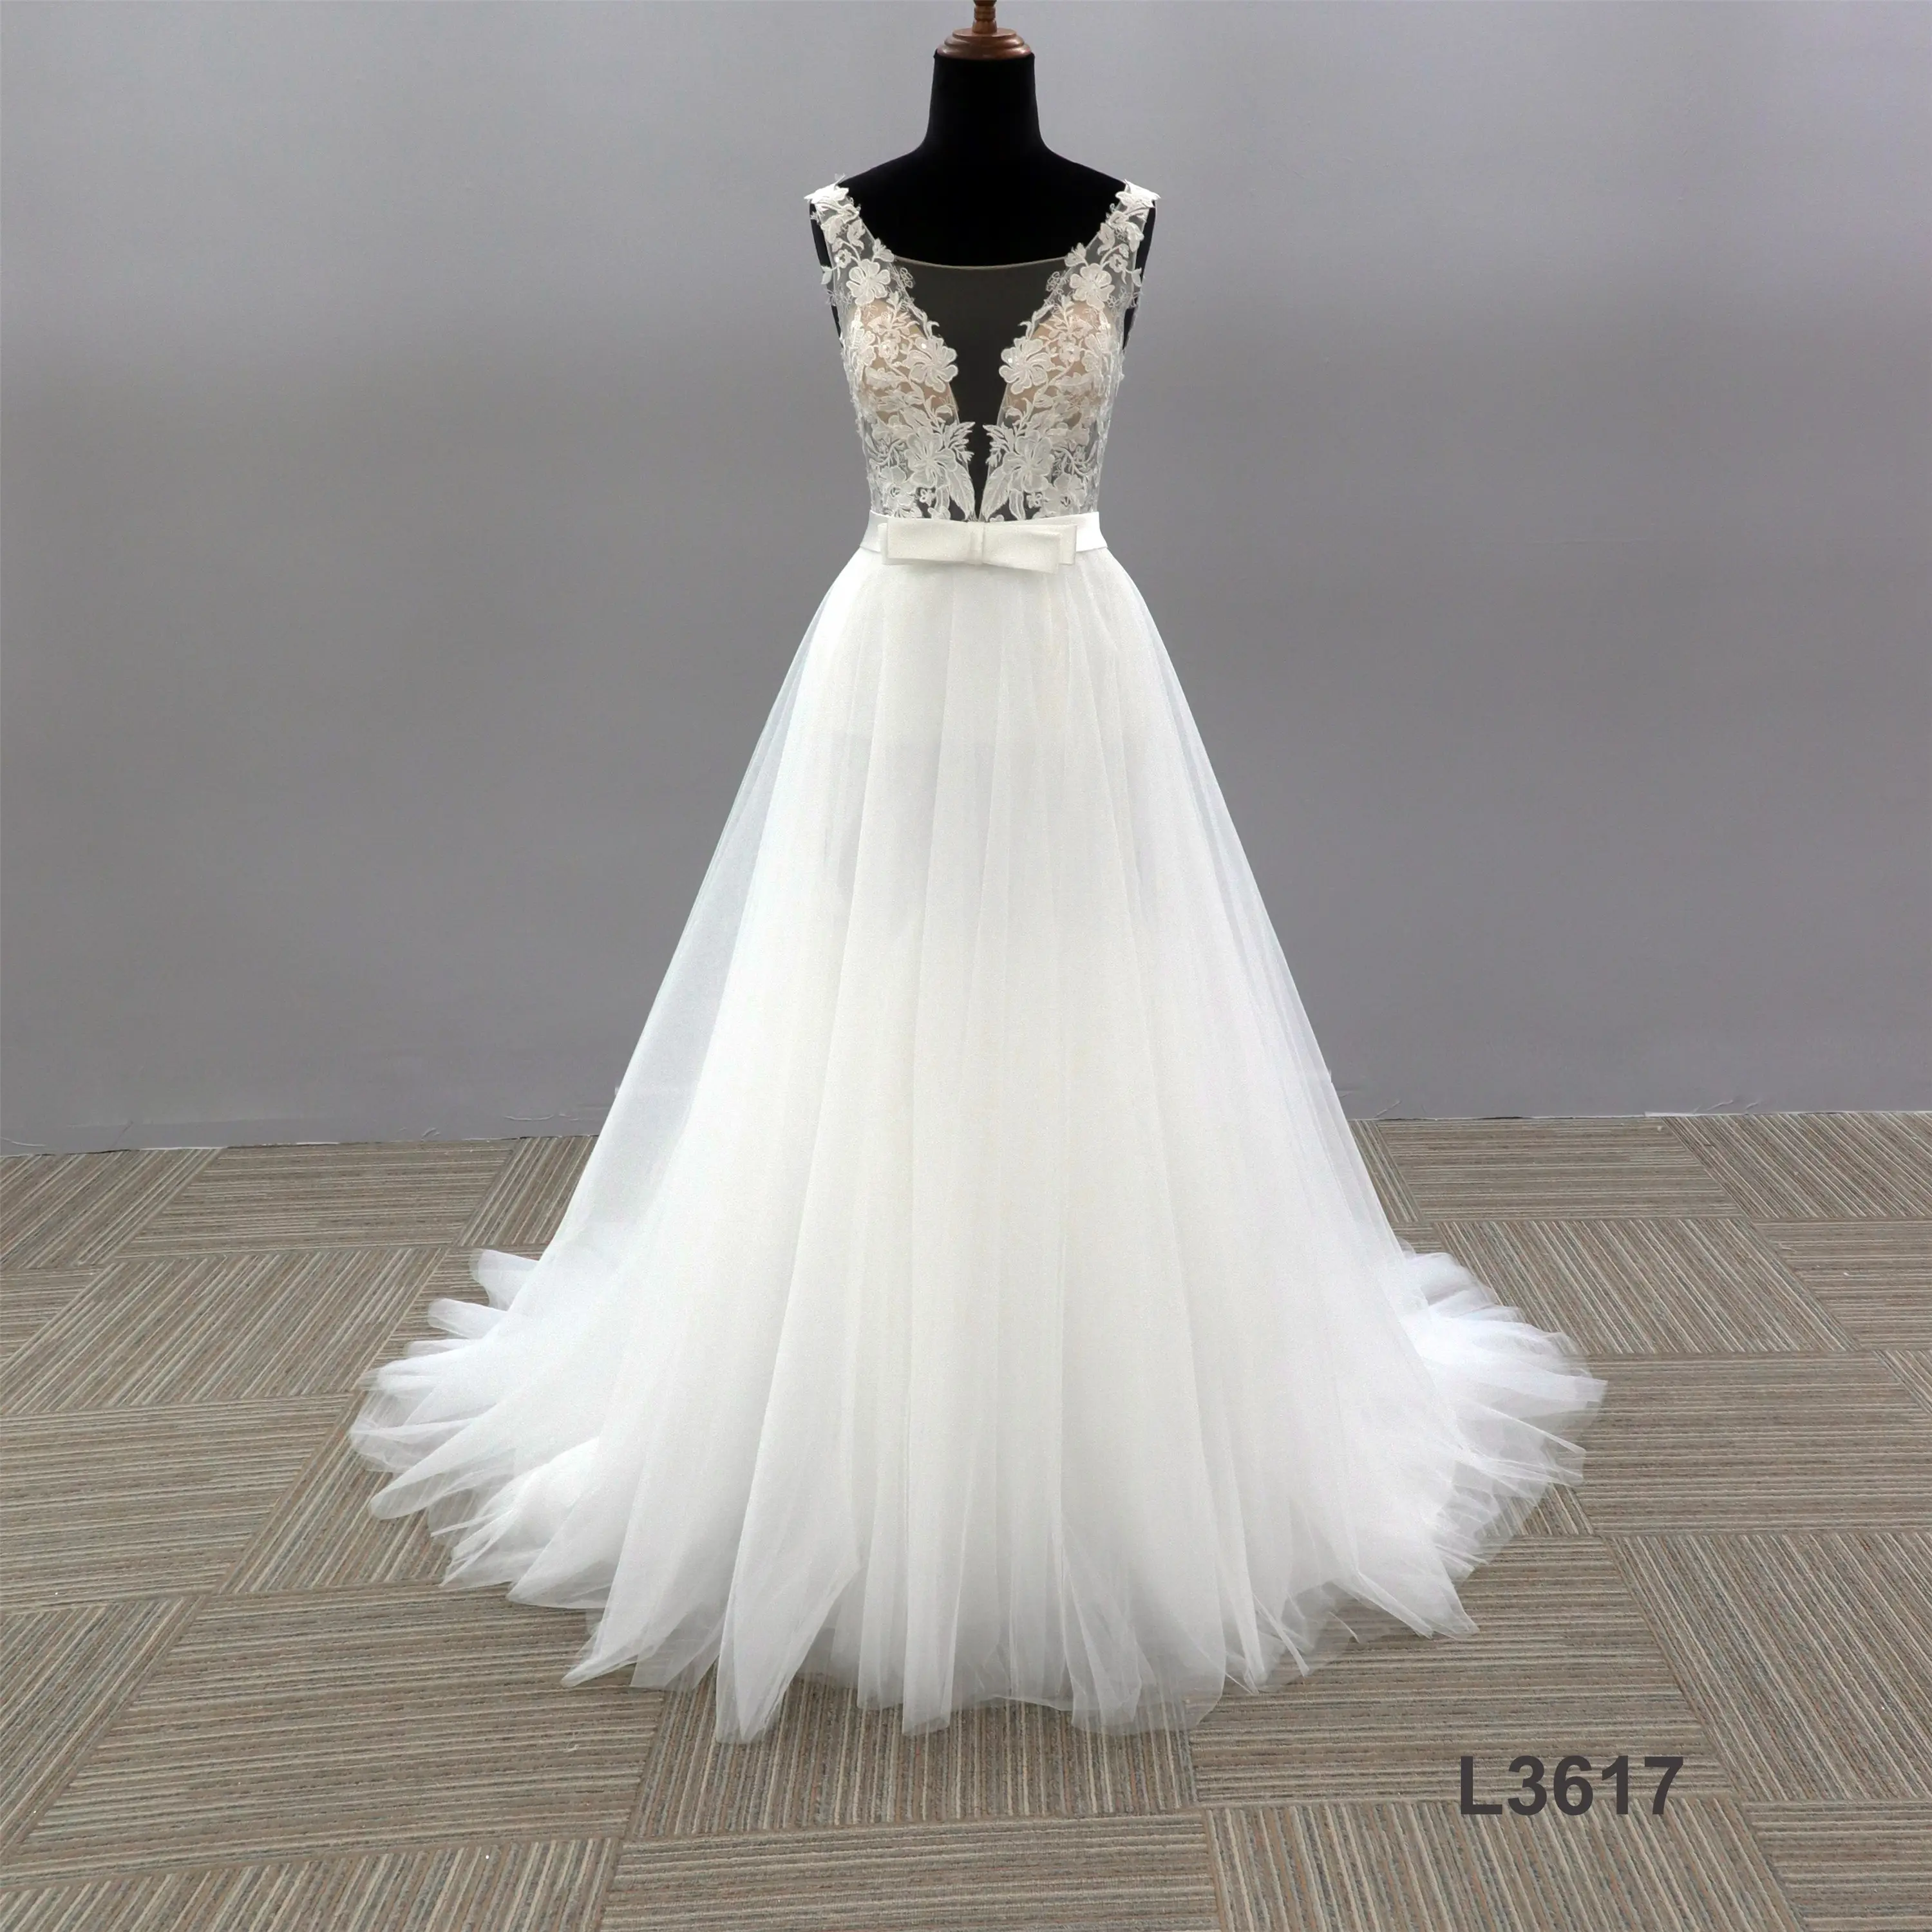 Fashion Lace Embroidered Bride Gown Bondage white gaun pengantin wedding dress white